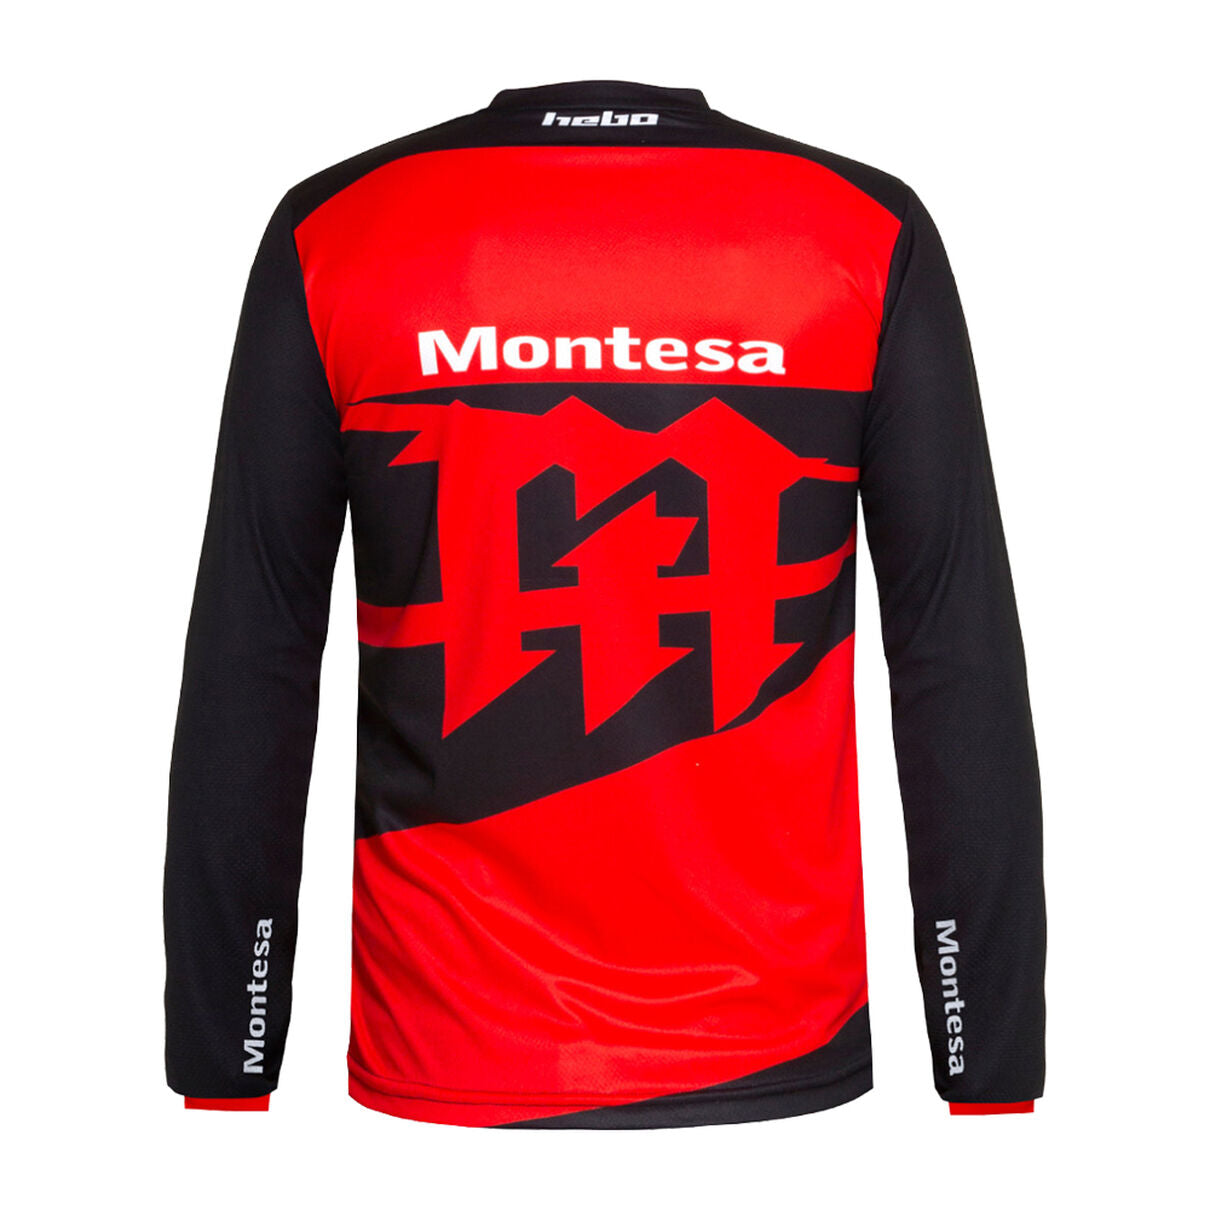 Hebo Trials Shirt Montesa Classic Tech Red